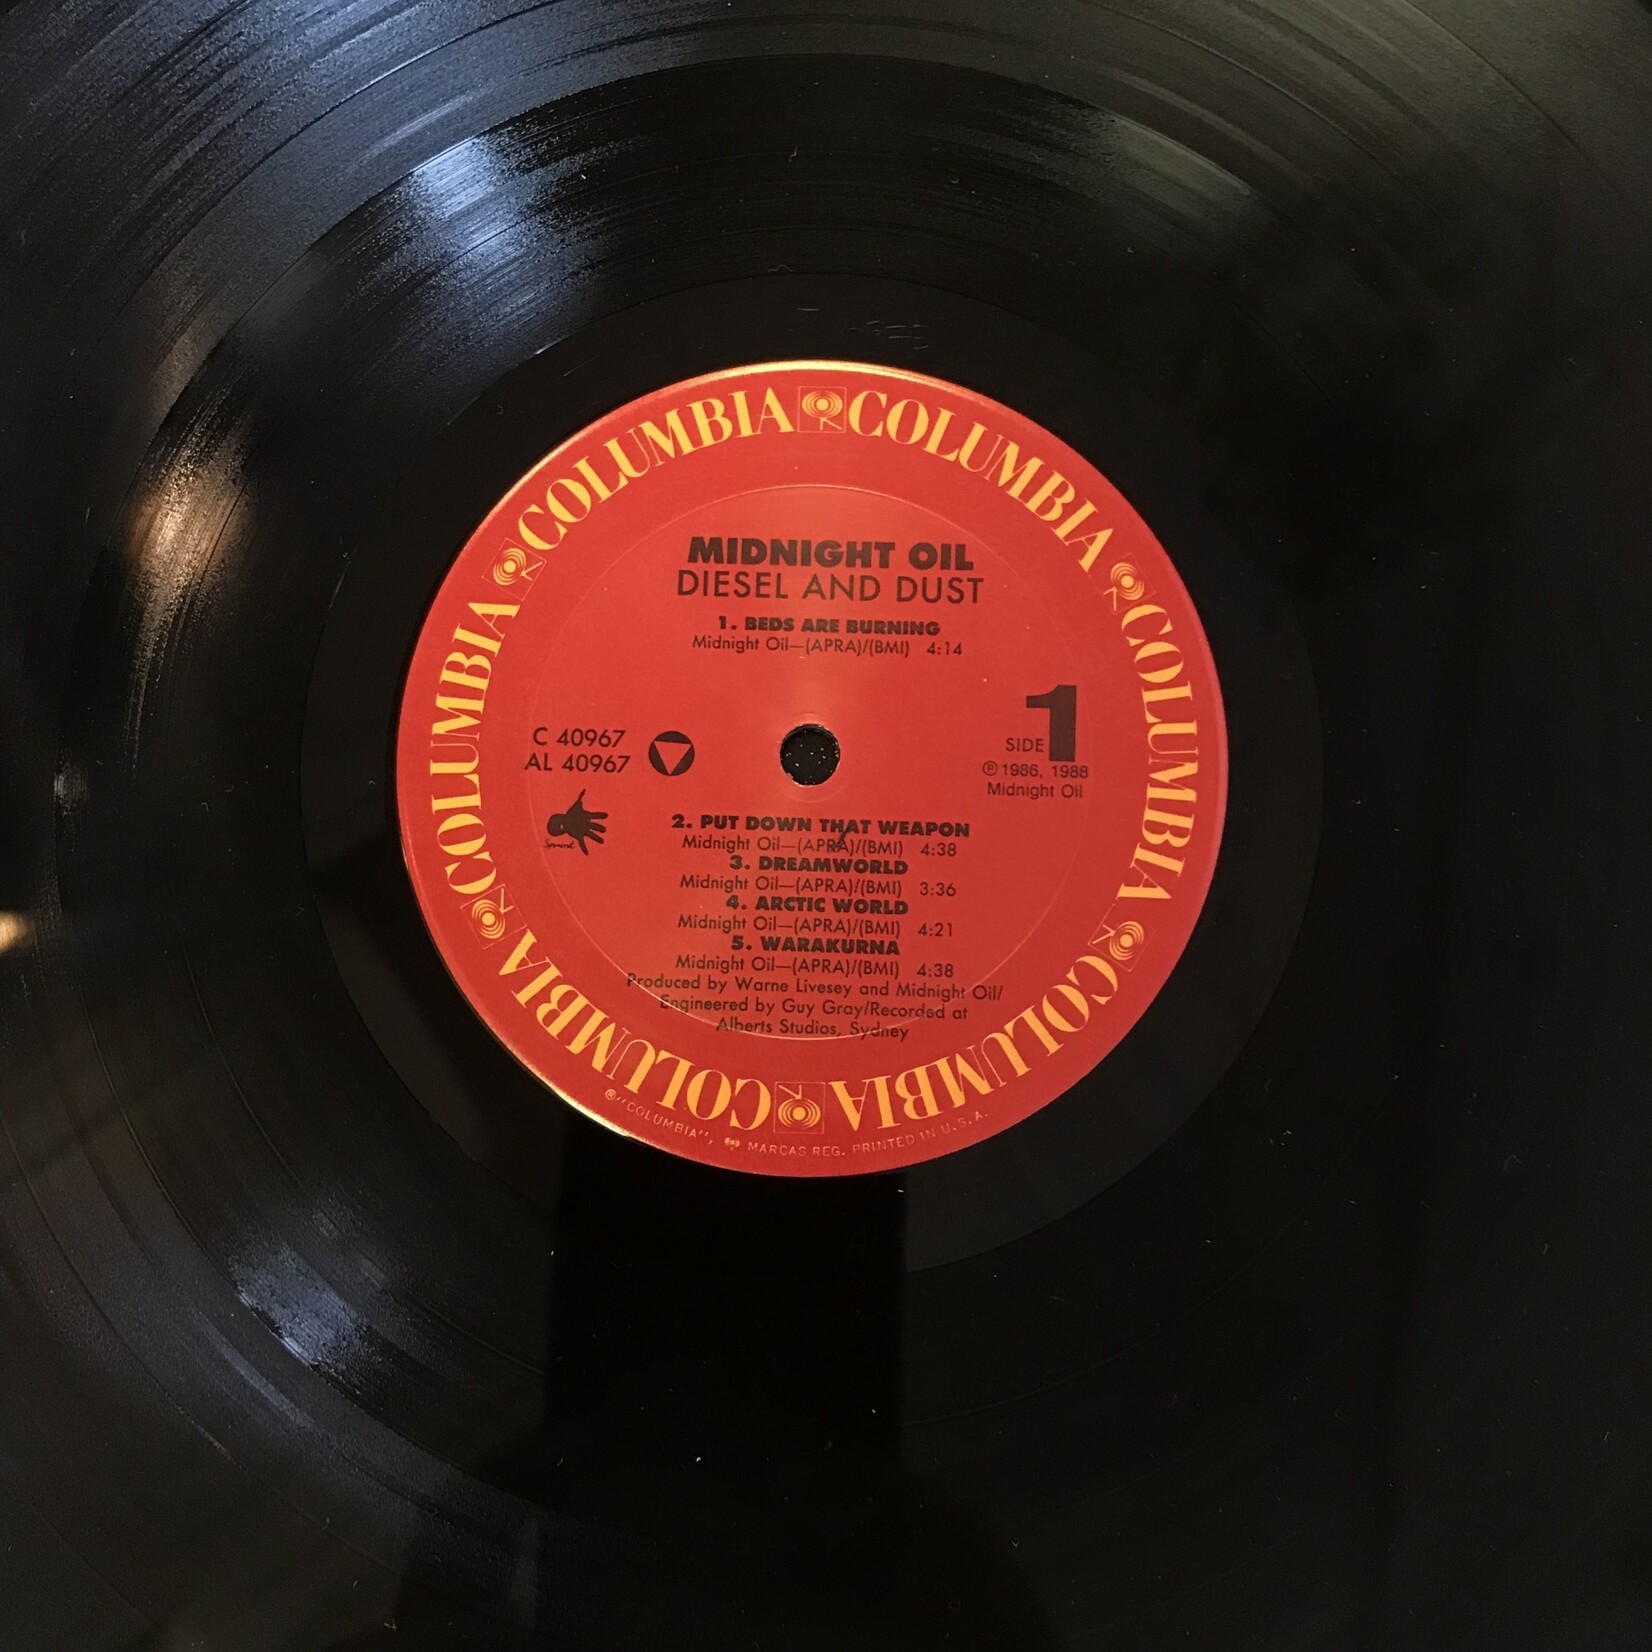 Midnight Oil - Diesel And Dust - FC40967 - Vinyl LP (USED)